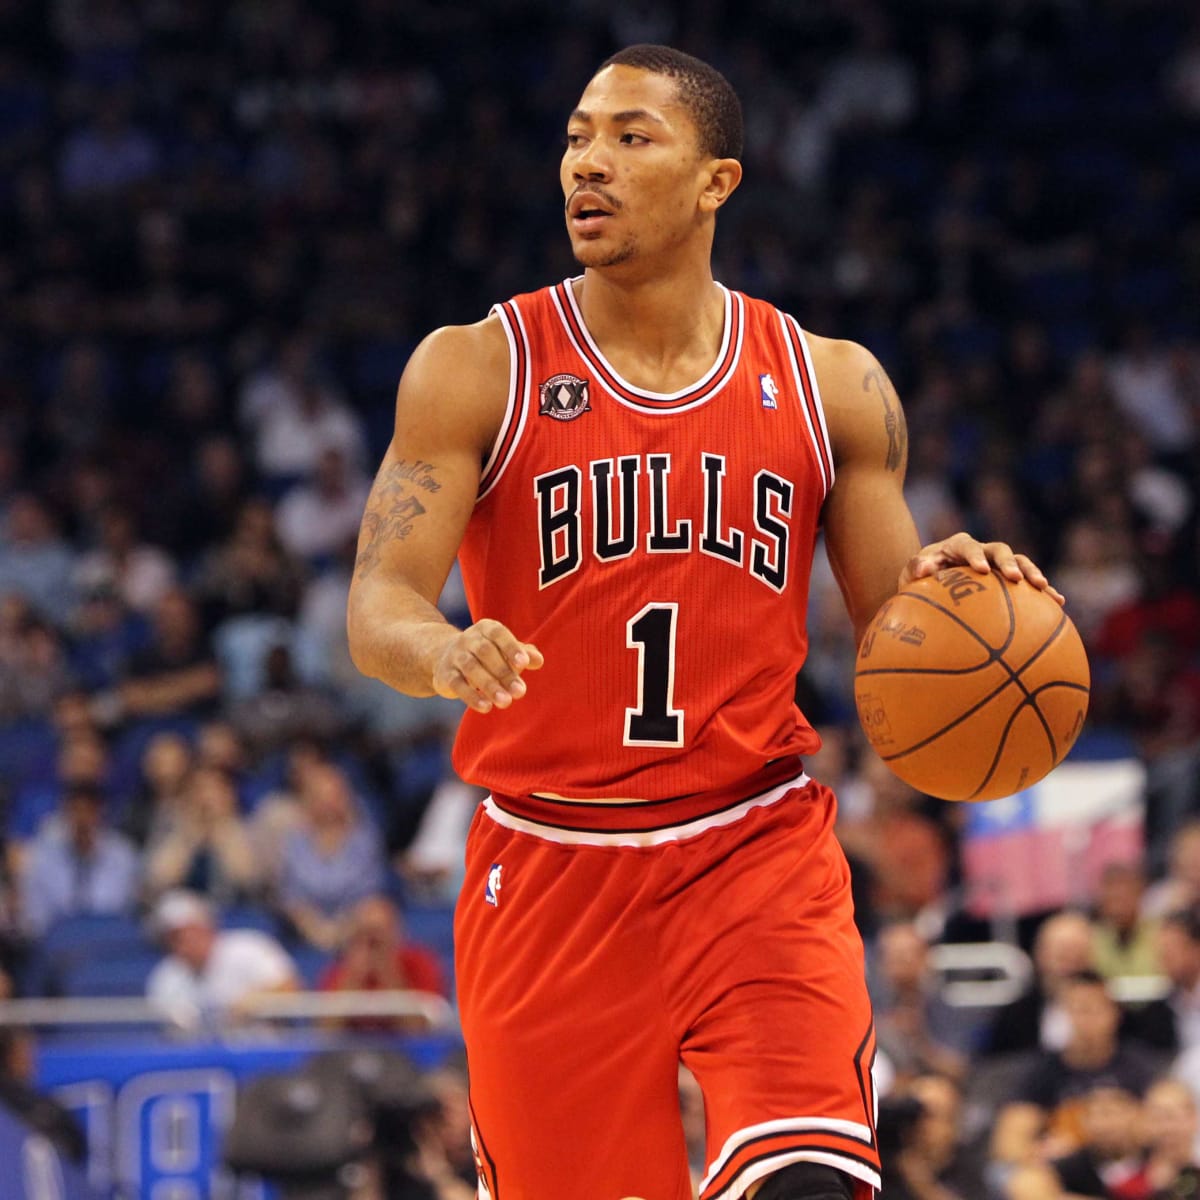 Bulls take Rose with No. 1 pick in NBA draft